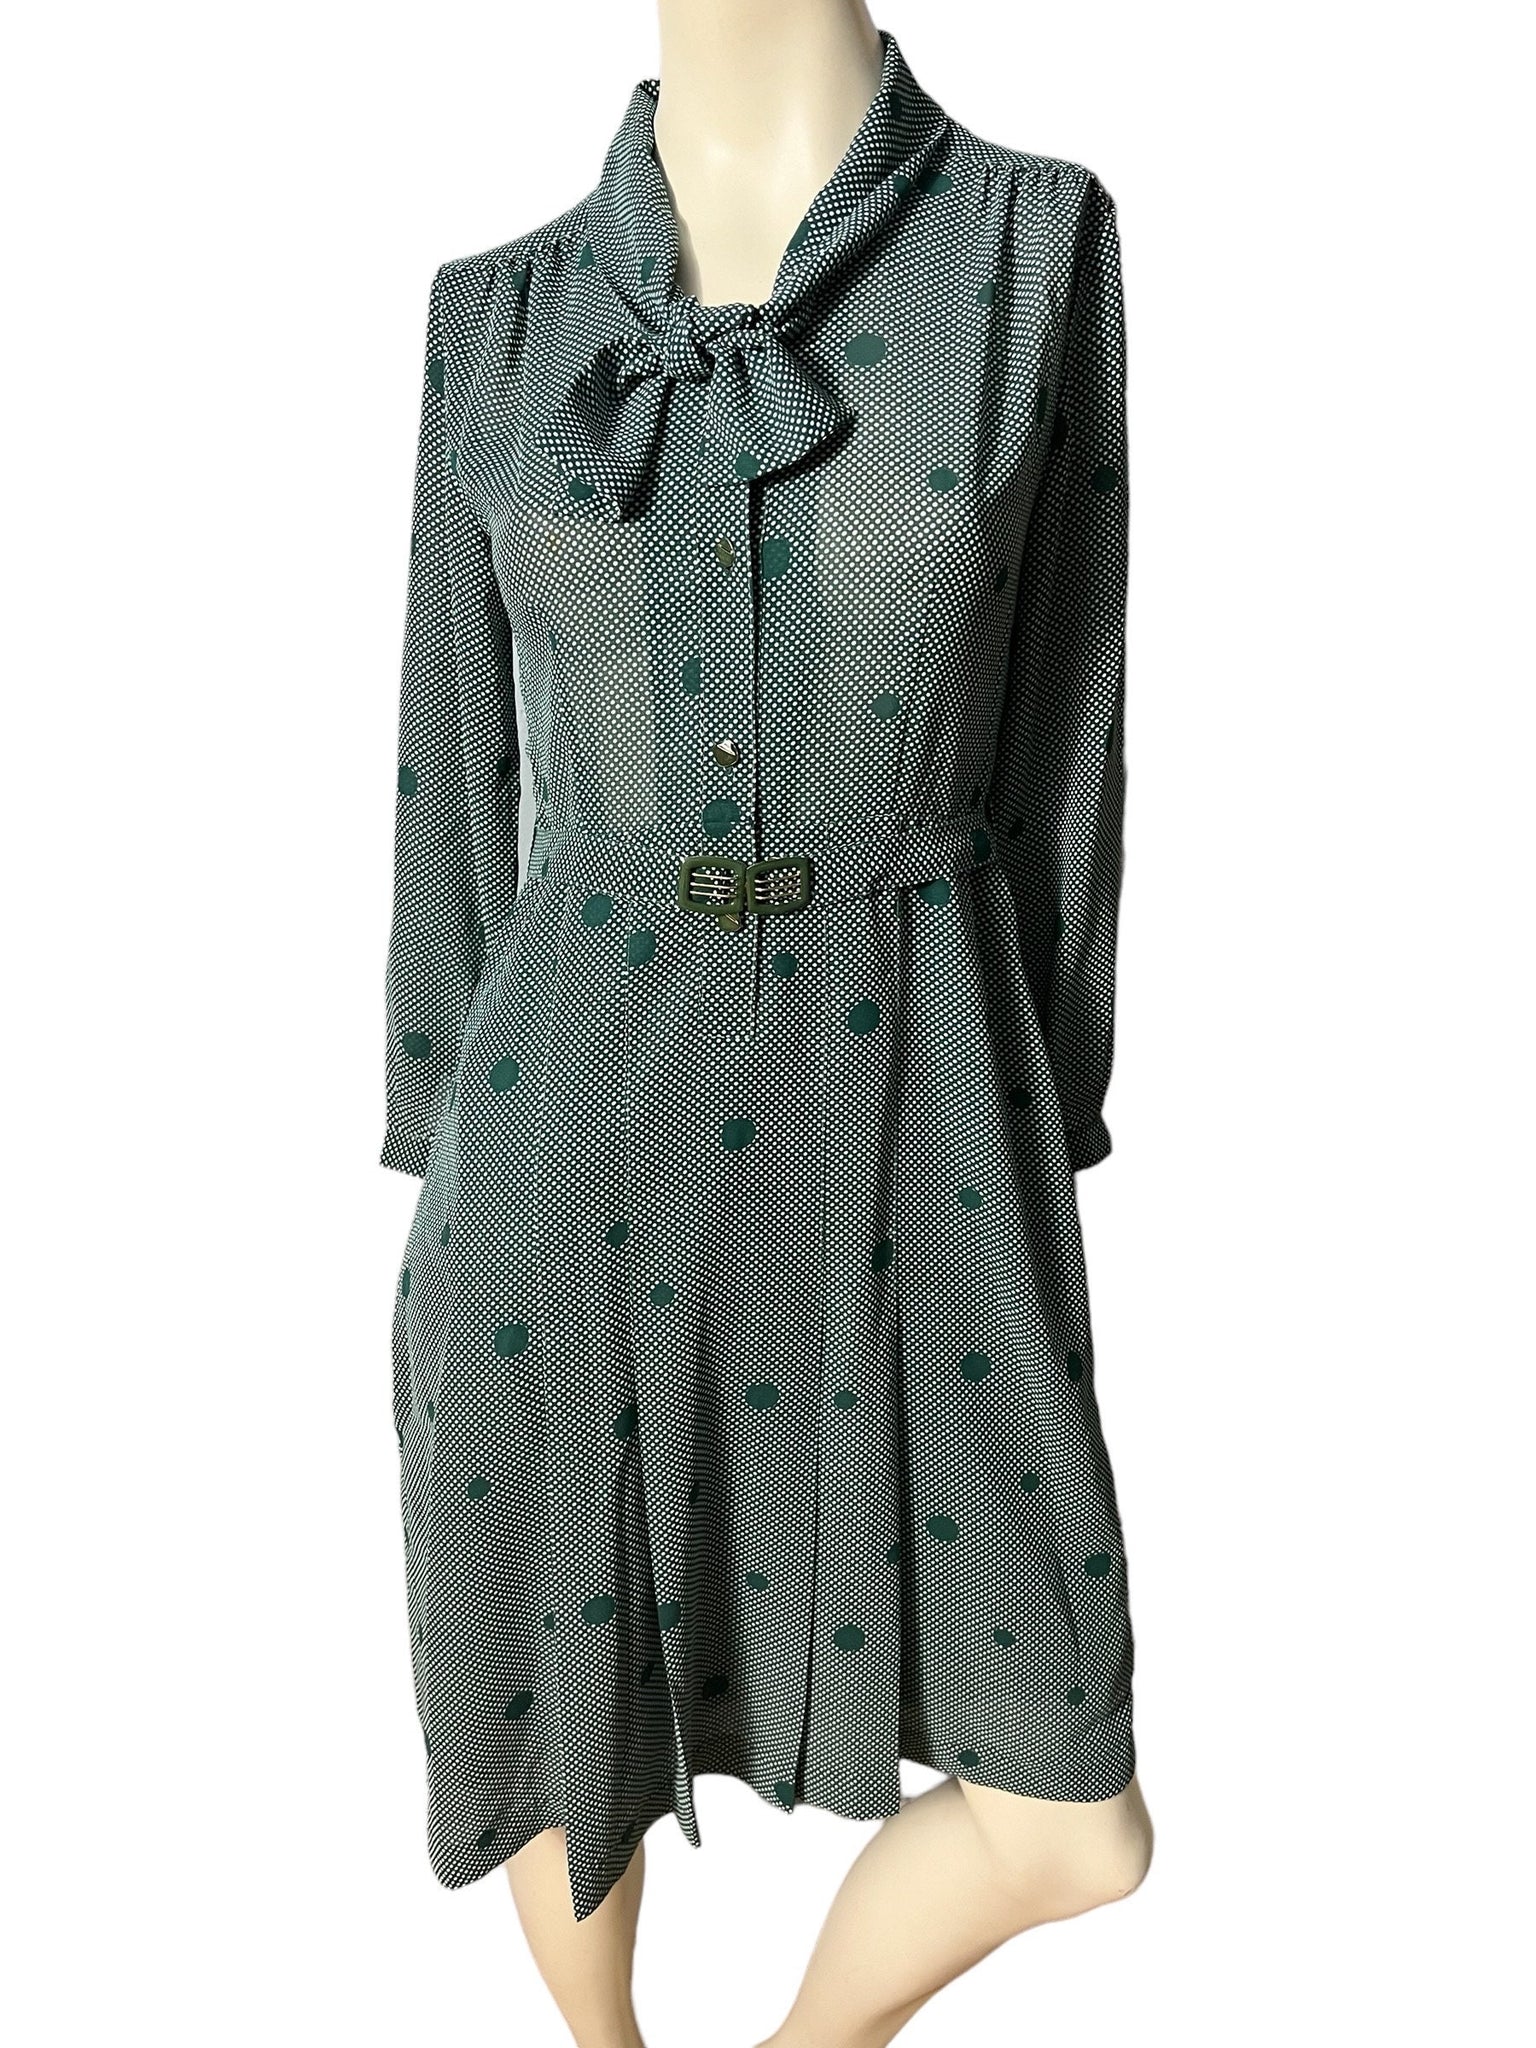 Vintage 40’s style green rayon dress M